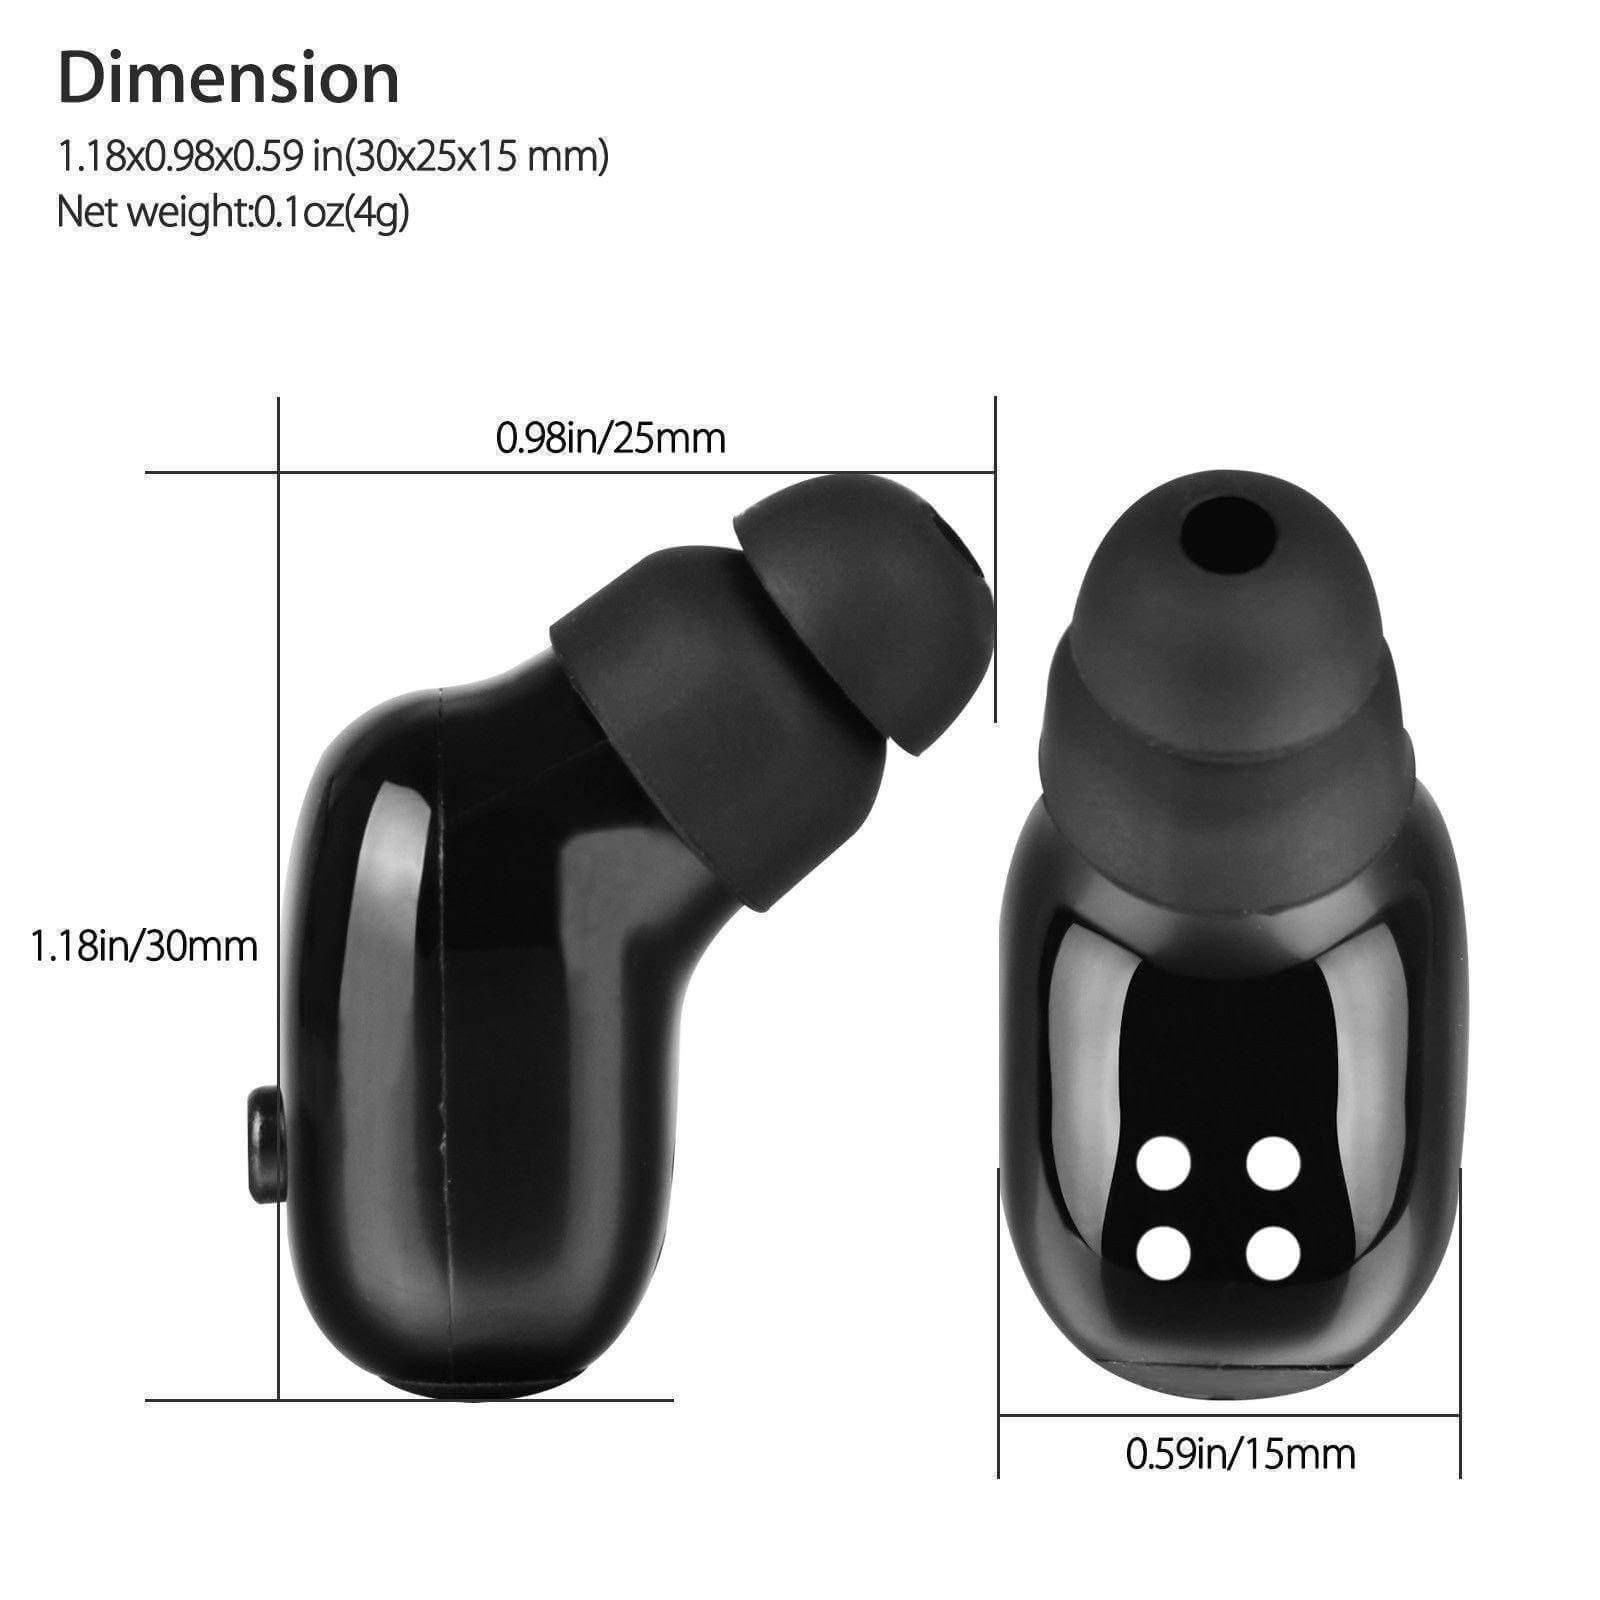 Waterproof Wireless Bluetooth Mini Sports Headphones In Ear Earbud Earphones Earpiece For Iphone Samsung Android